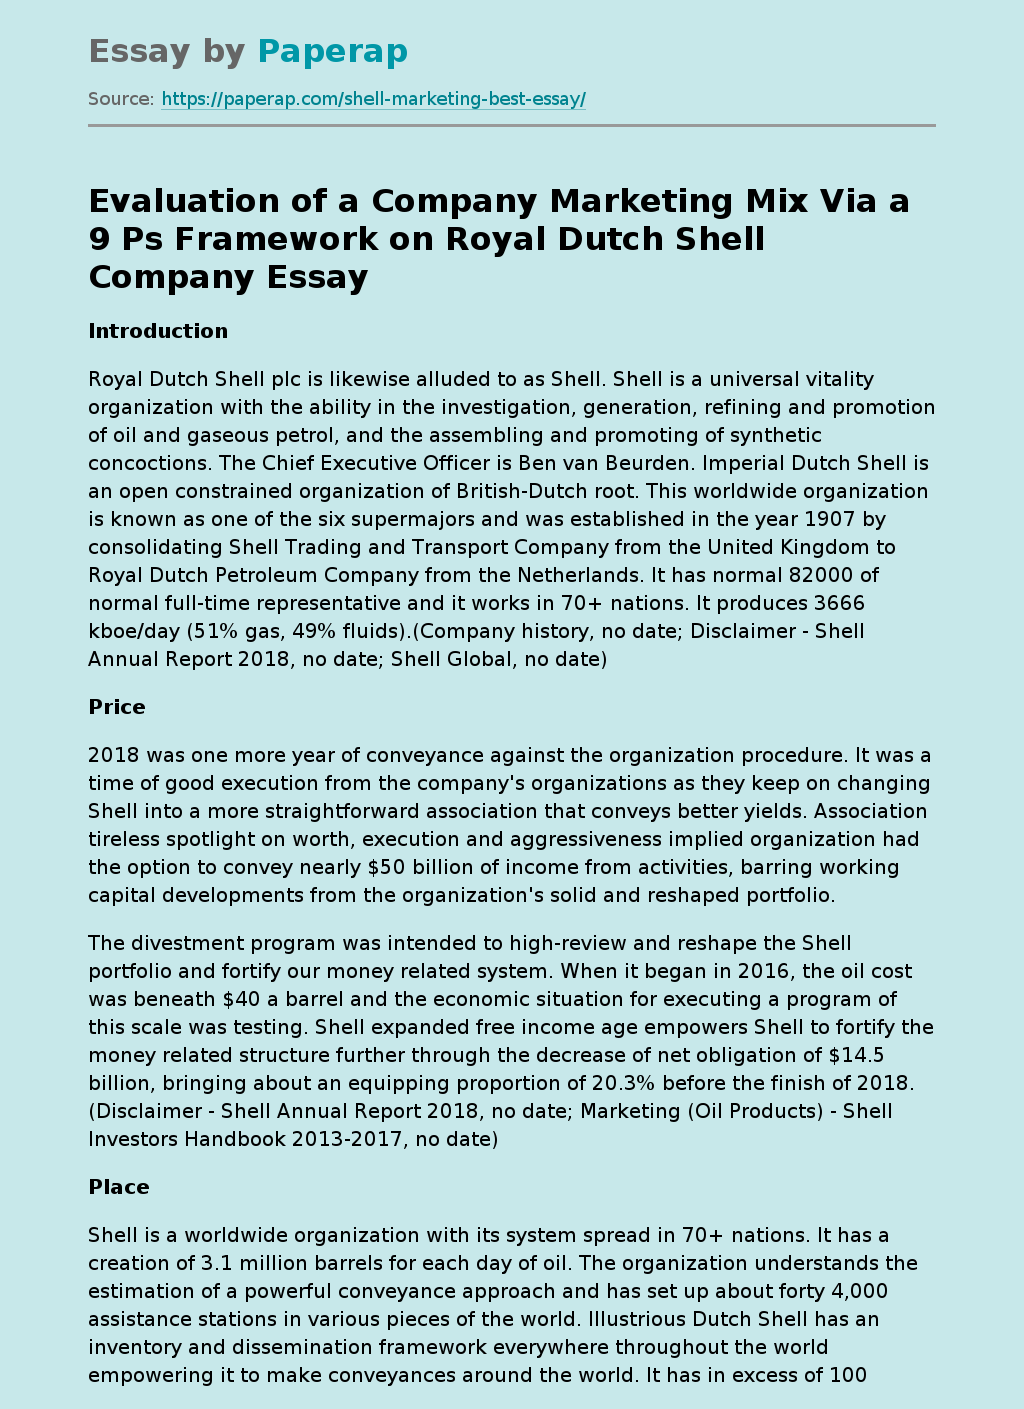 Marketing Mix Evaluation of Royal Dutch Shell: 9 P's